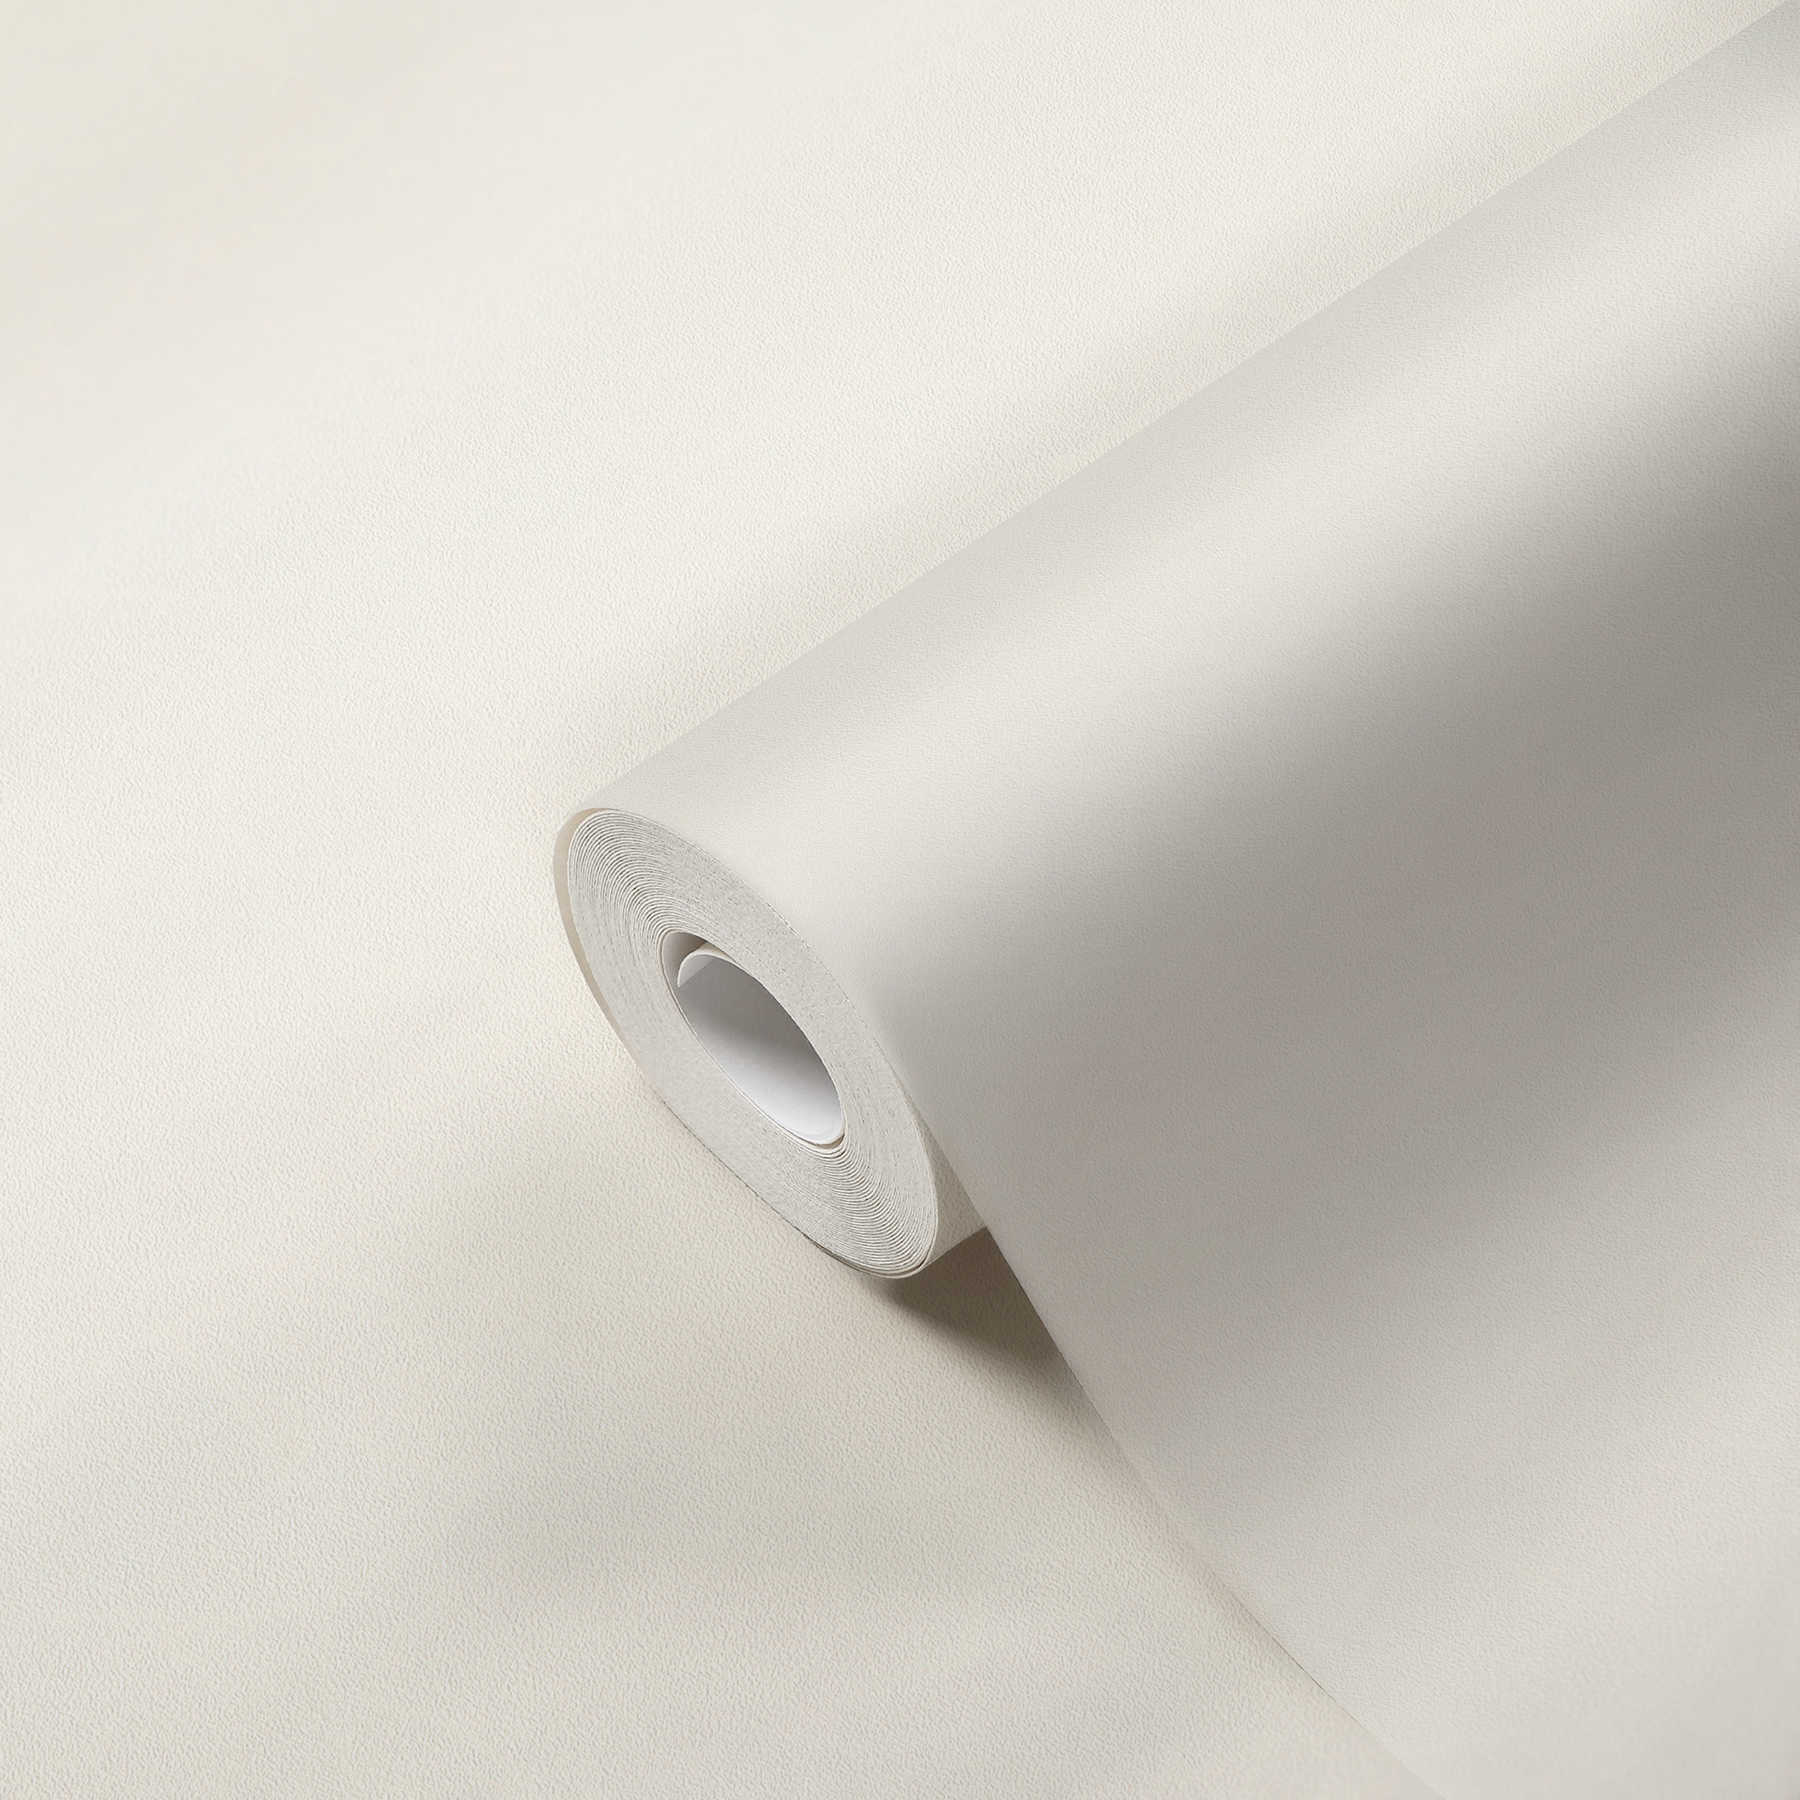             High quality wallpaper plain textile structure - cream
        